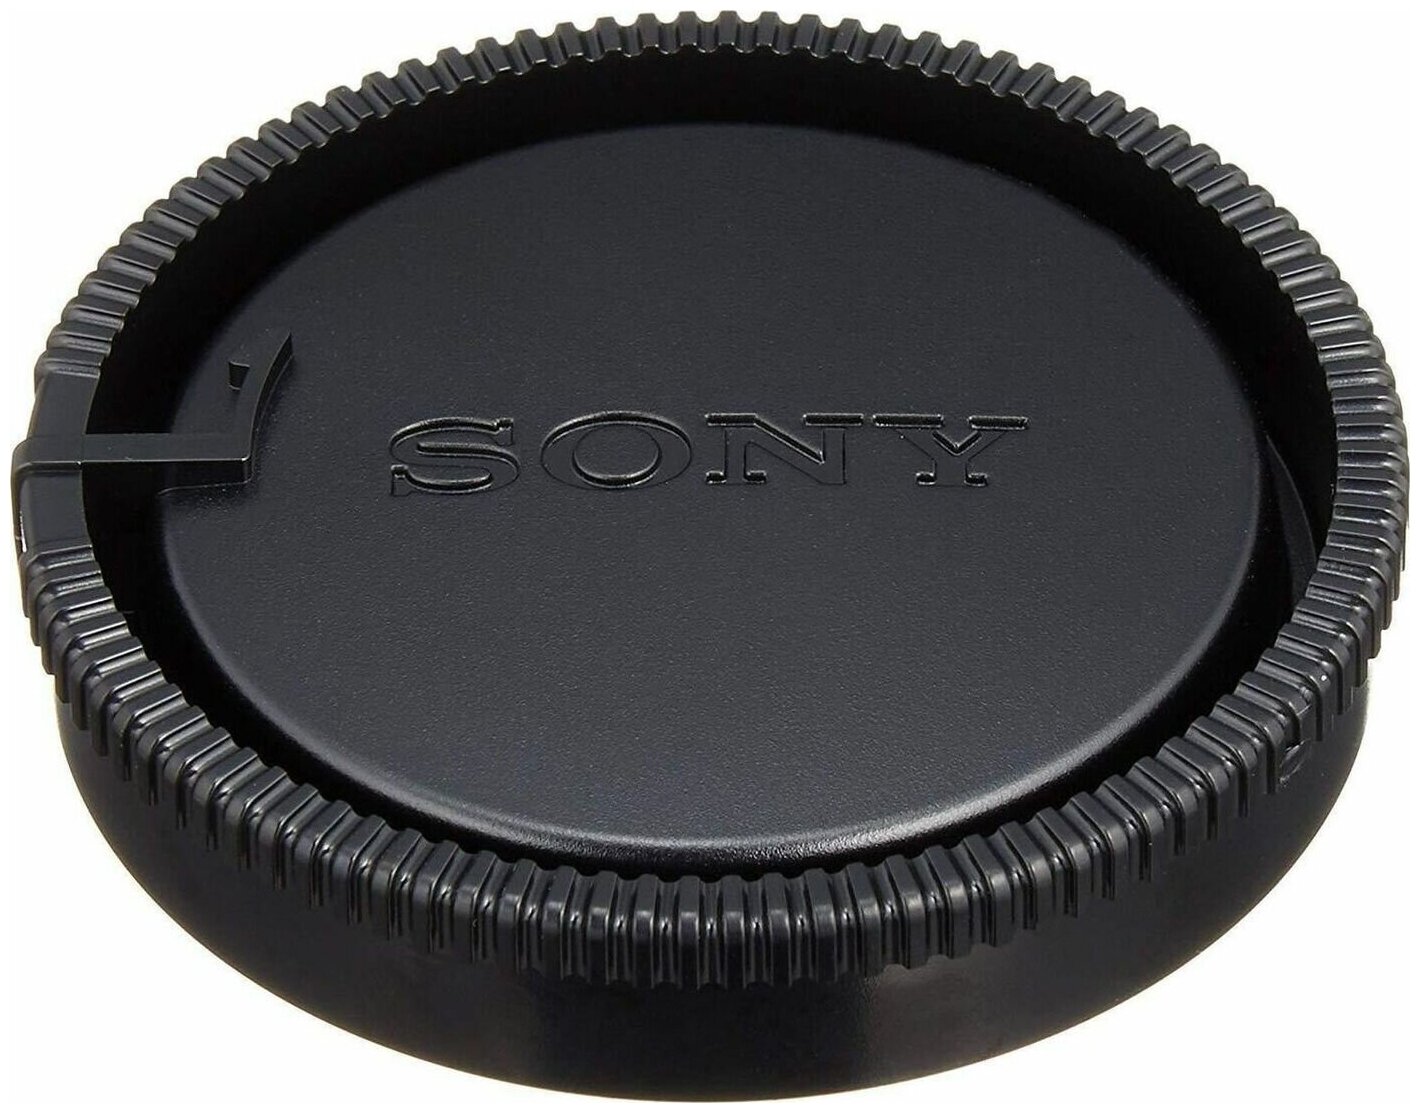 Крышка для байонета Sony - фото №2